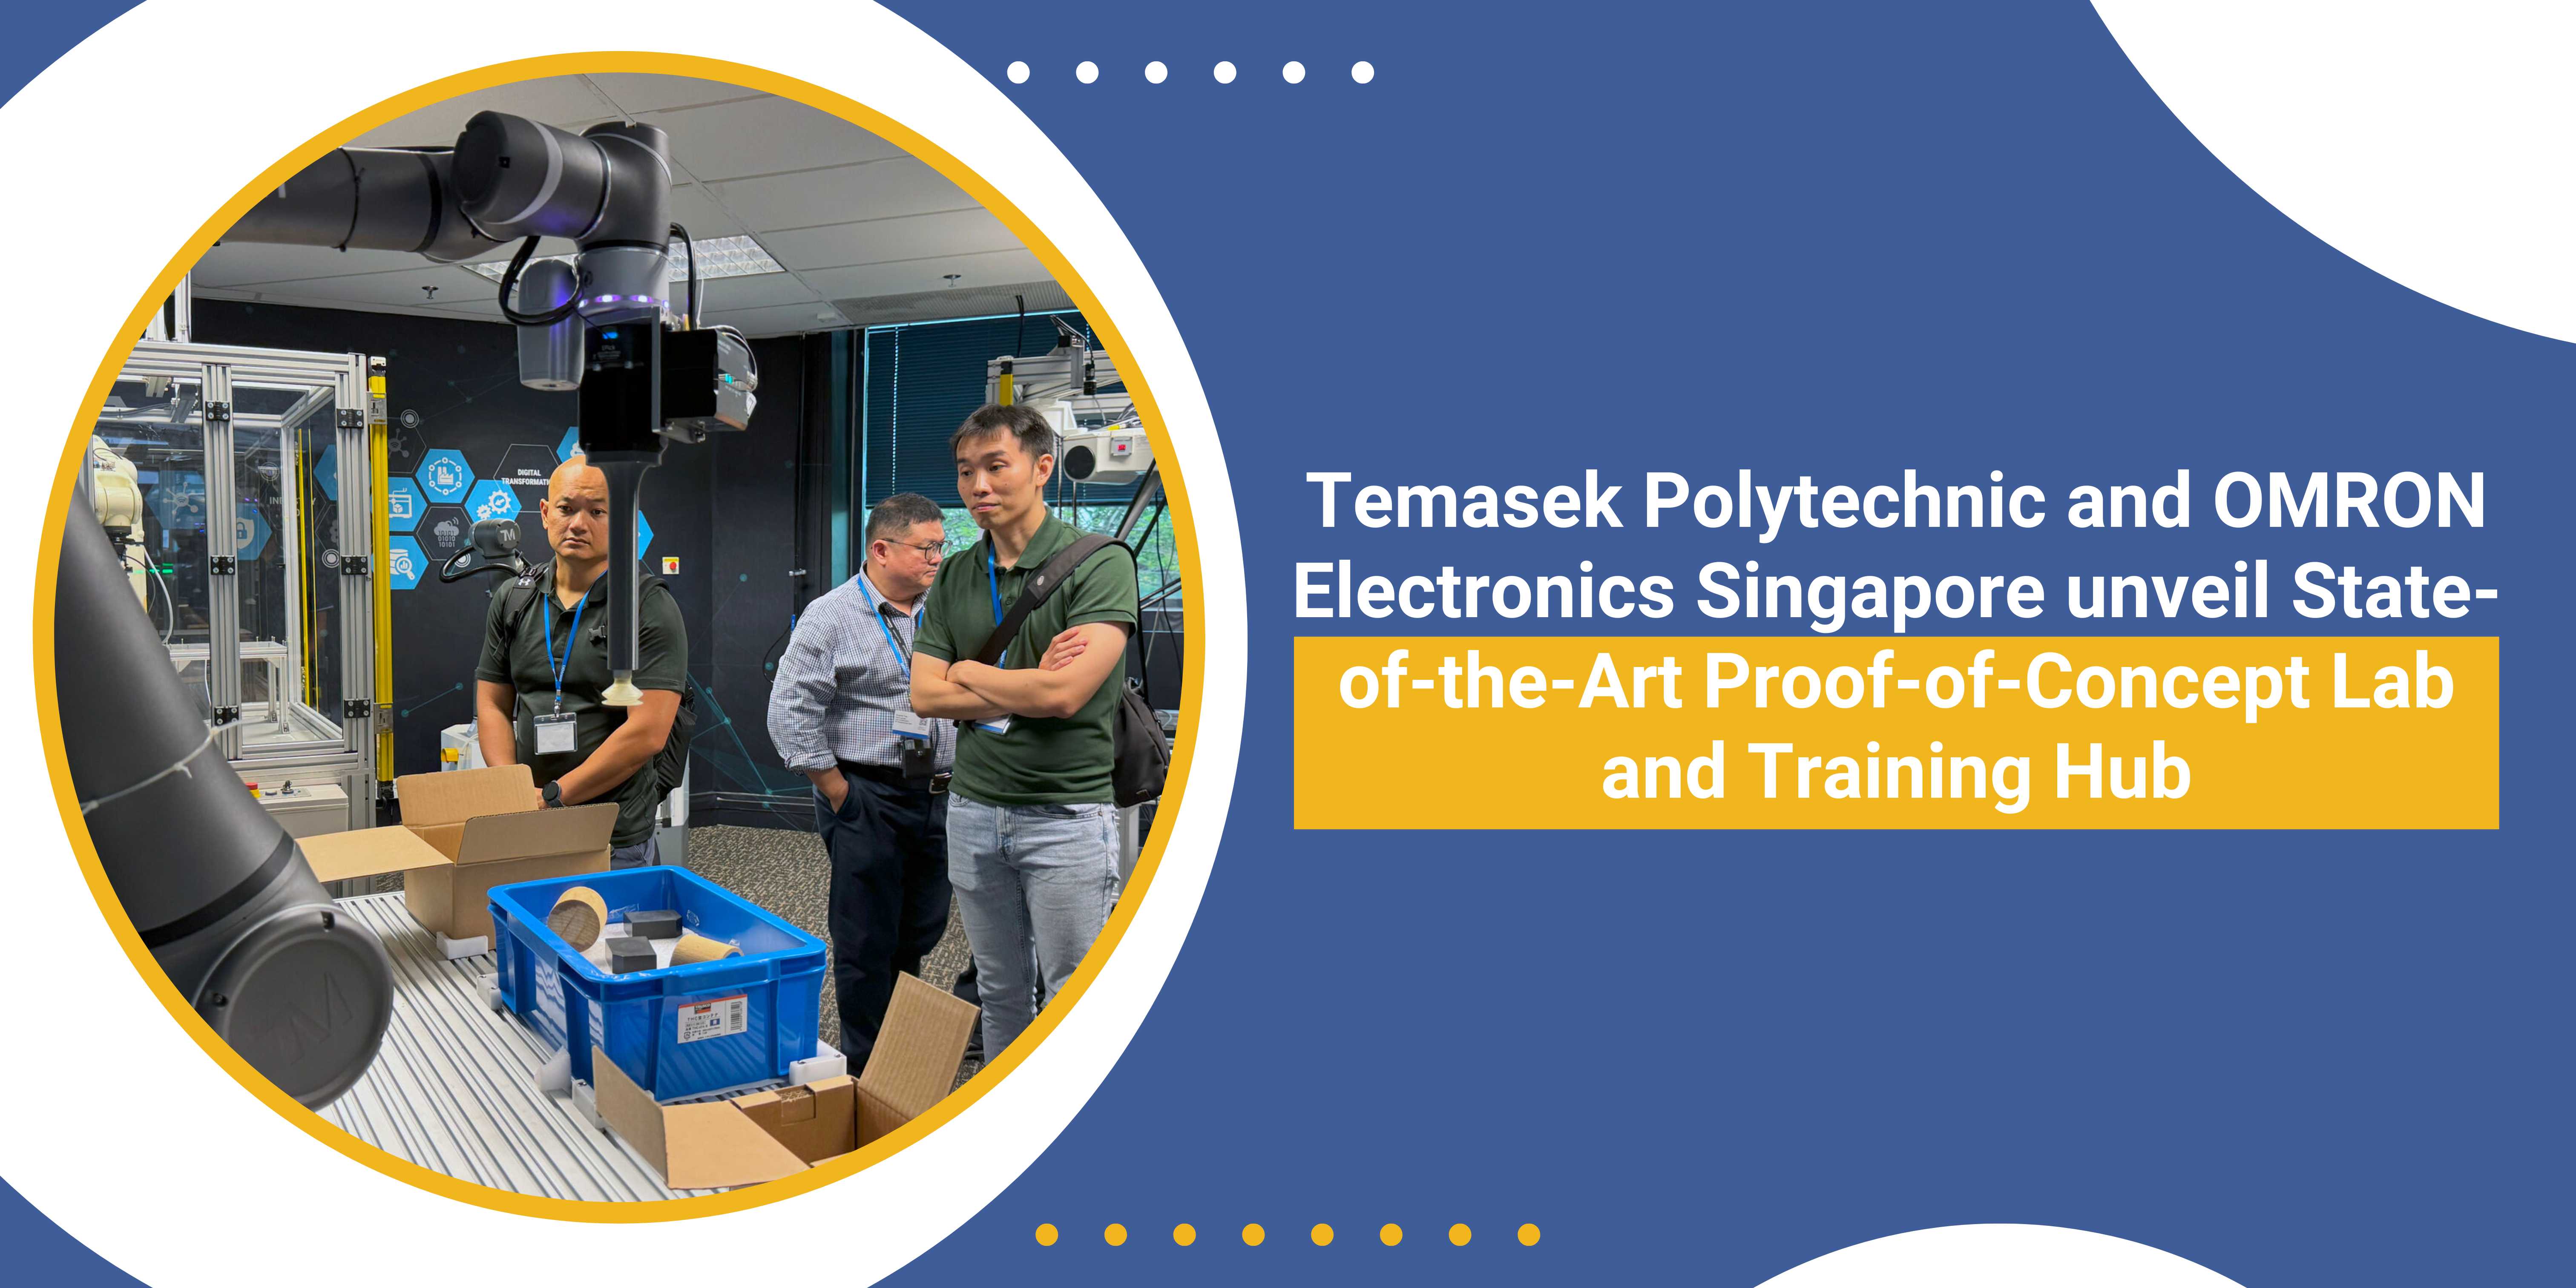 Temasek Polytechnic and OMRON Electronics Singapore Launch a PoC Lab & Training Hub